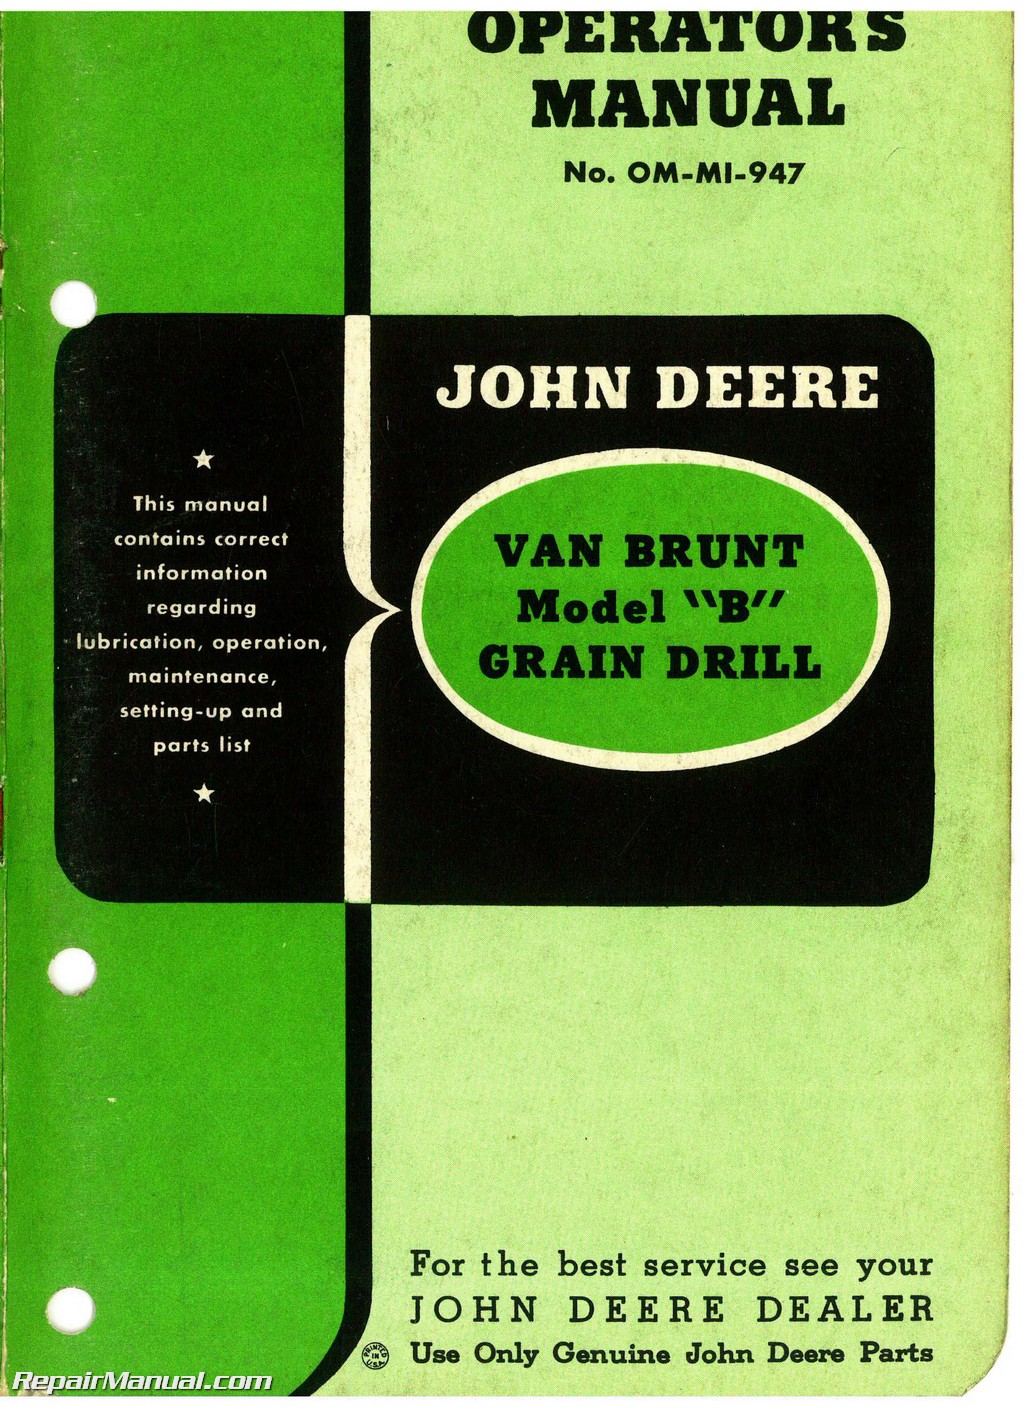 John Deere Van Brunt Model B Grain Drill Operators Manual & Parts Manual